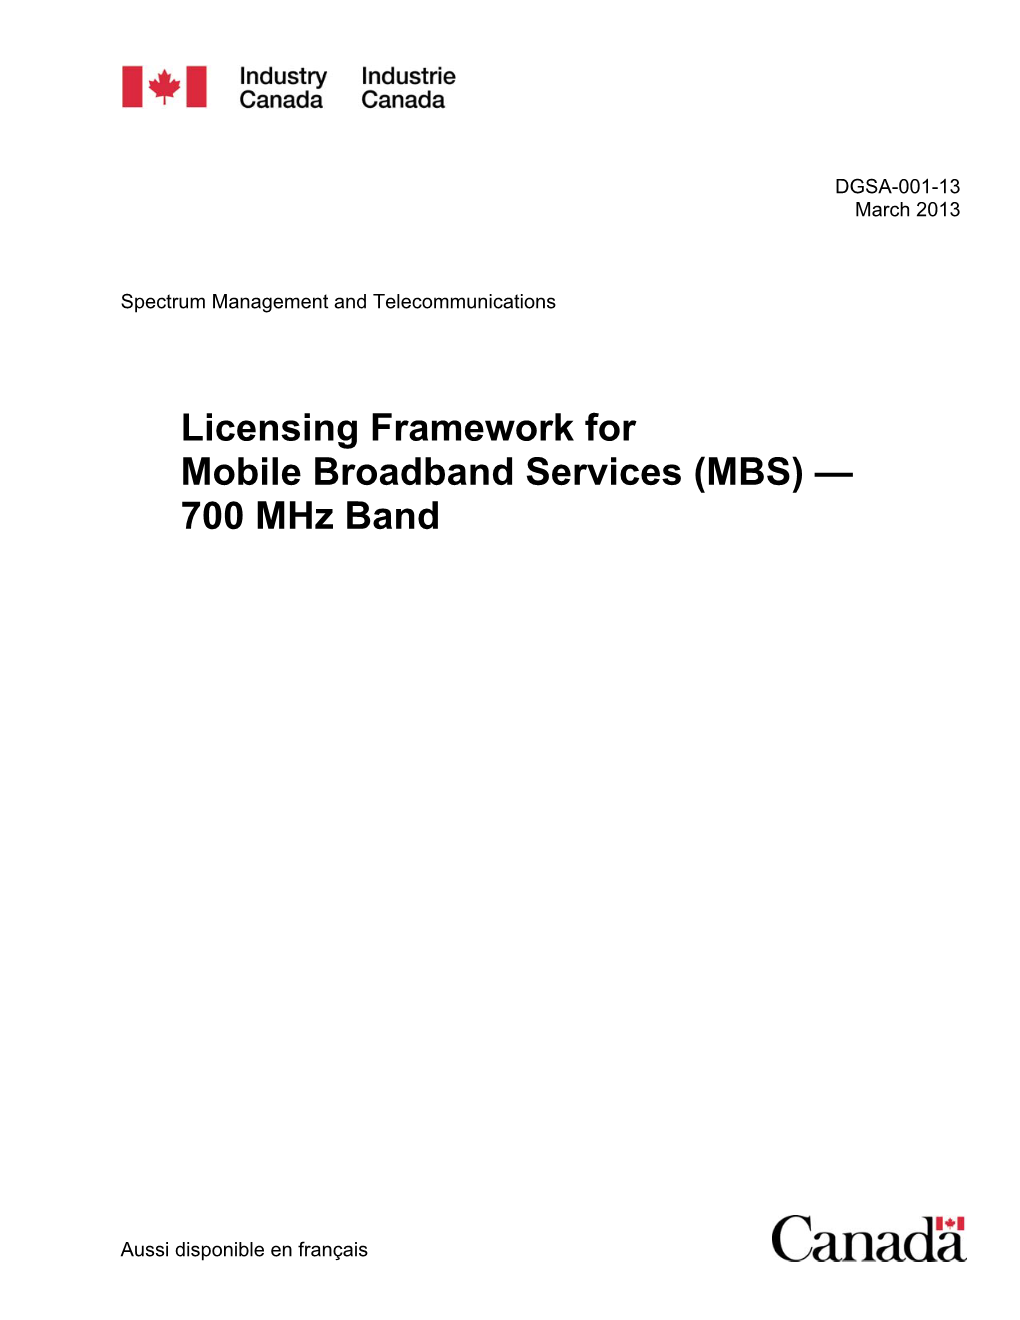 Licensing Framework for Mobile Broadband Services (MBS) — 700 Mhz Band